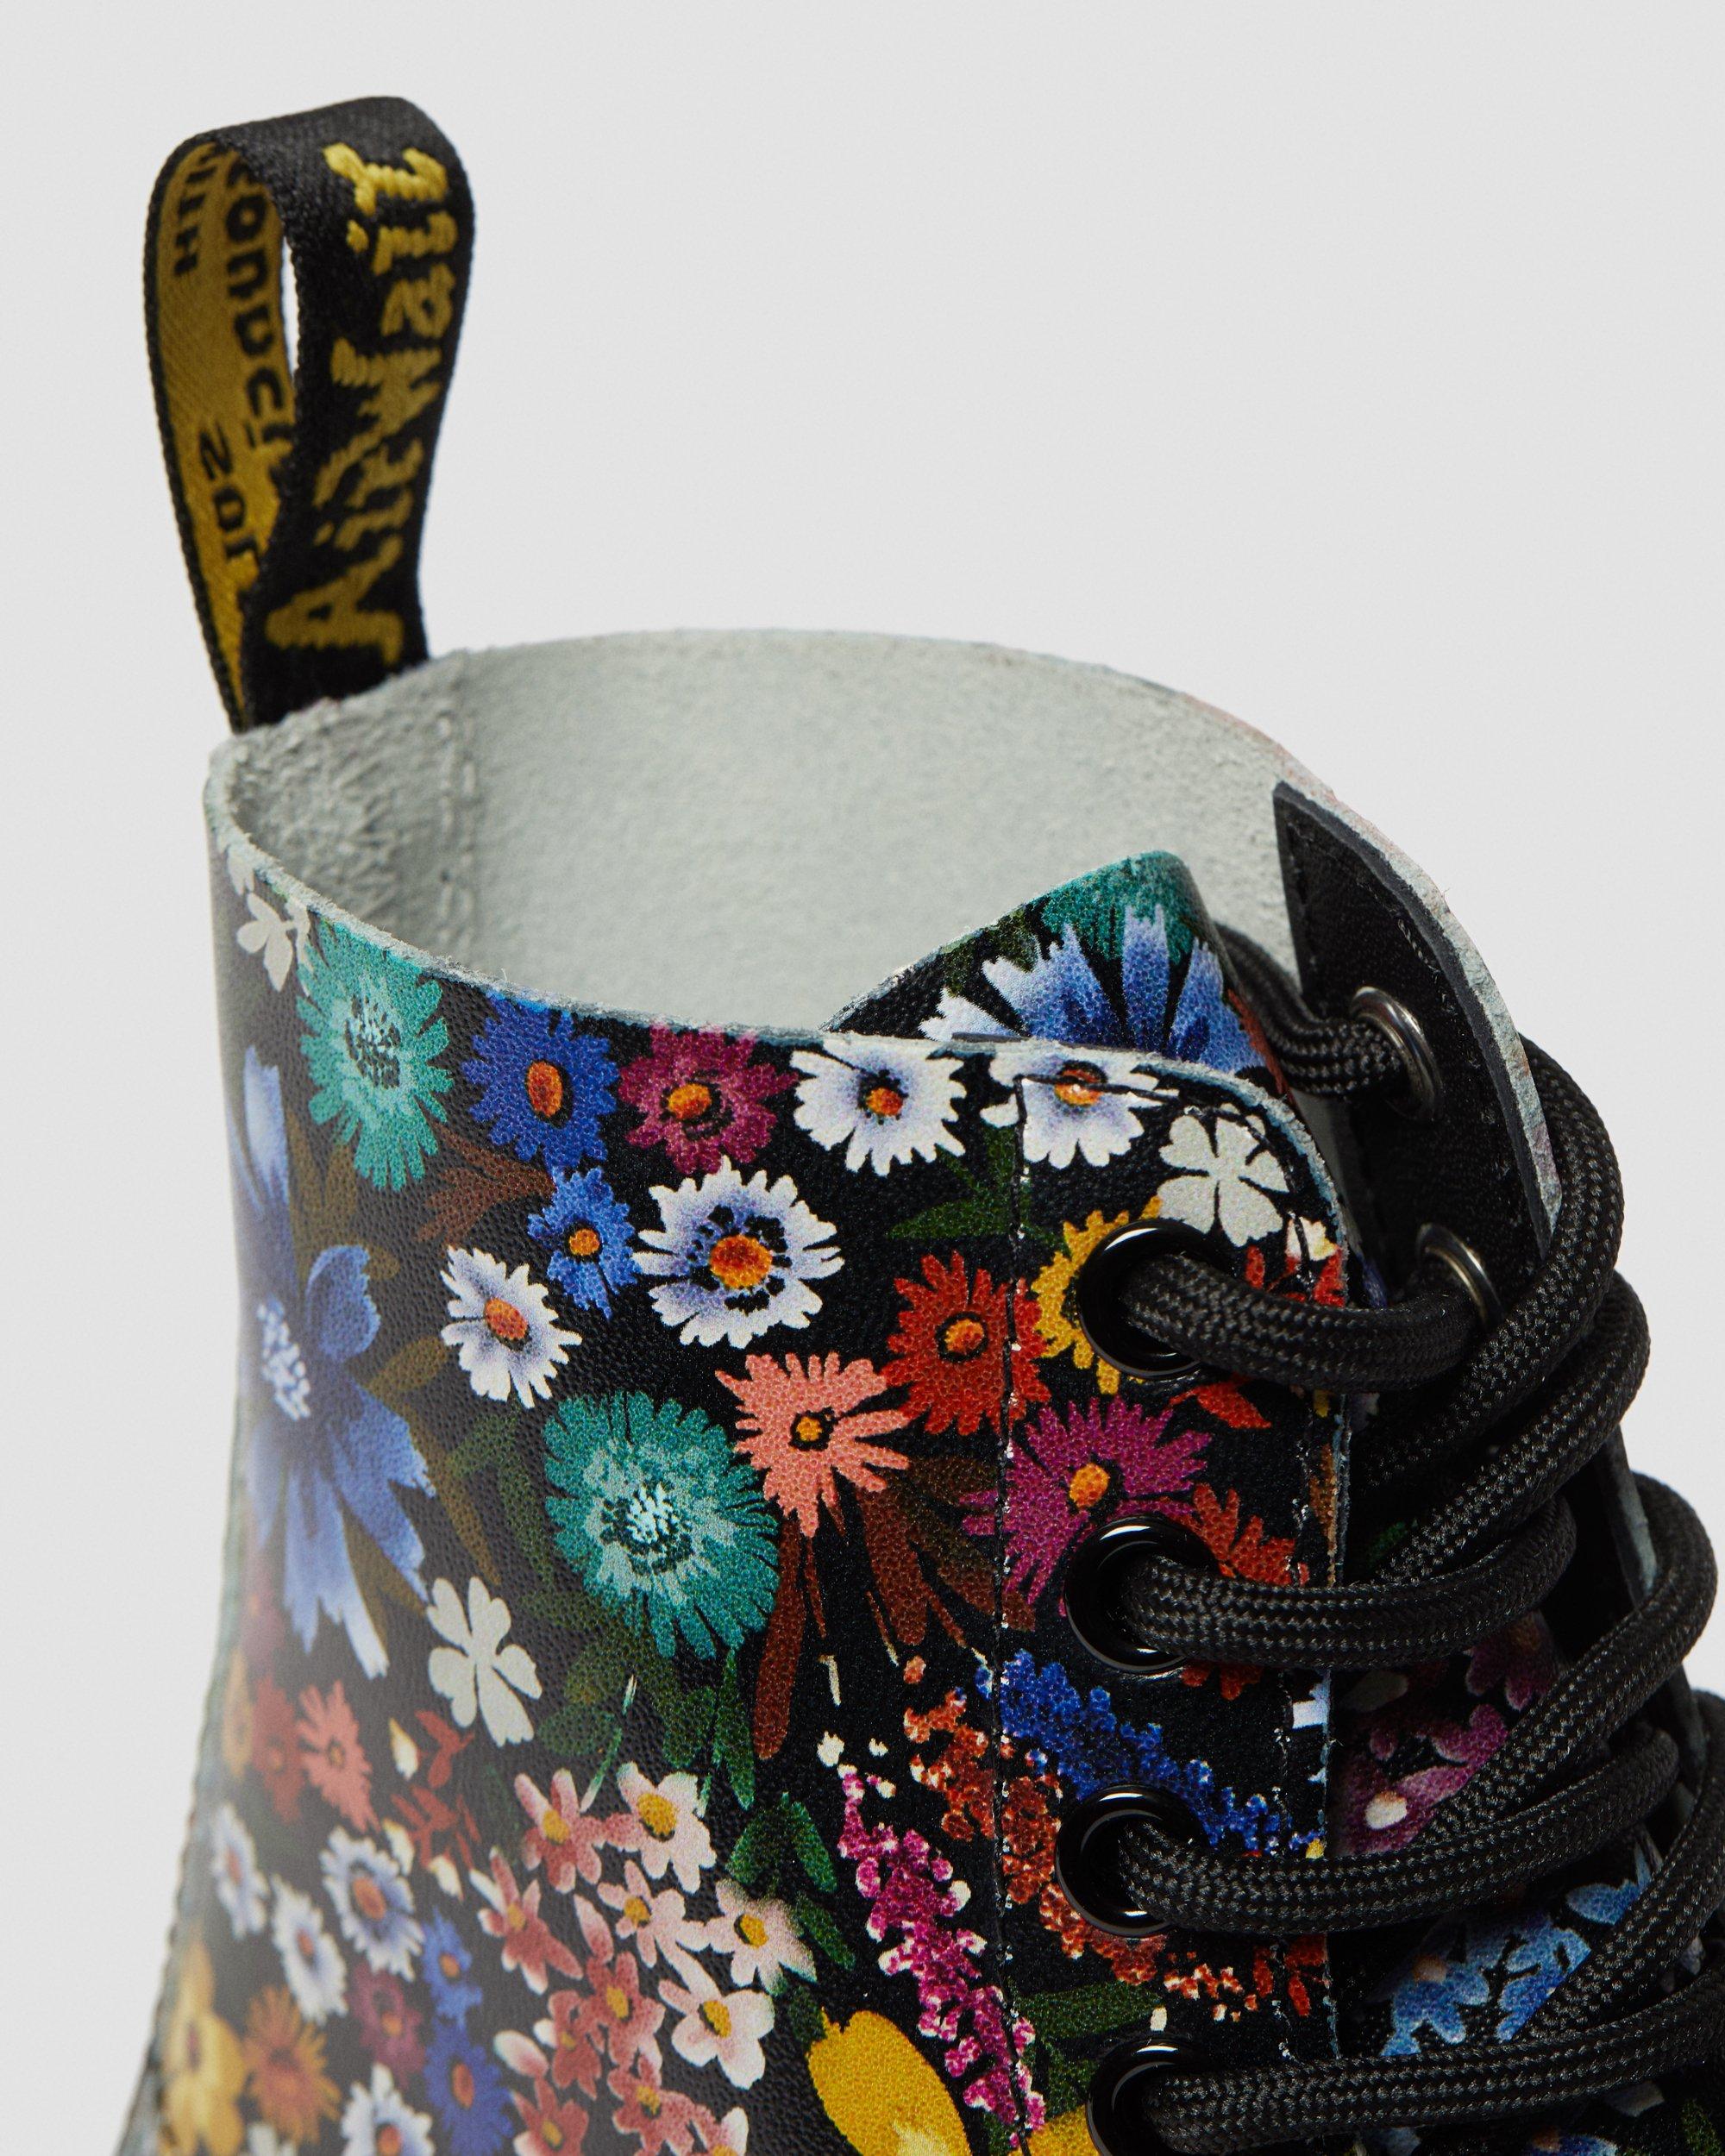 Buy > doc martens flower print boots > in stock